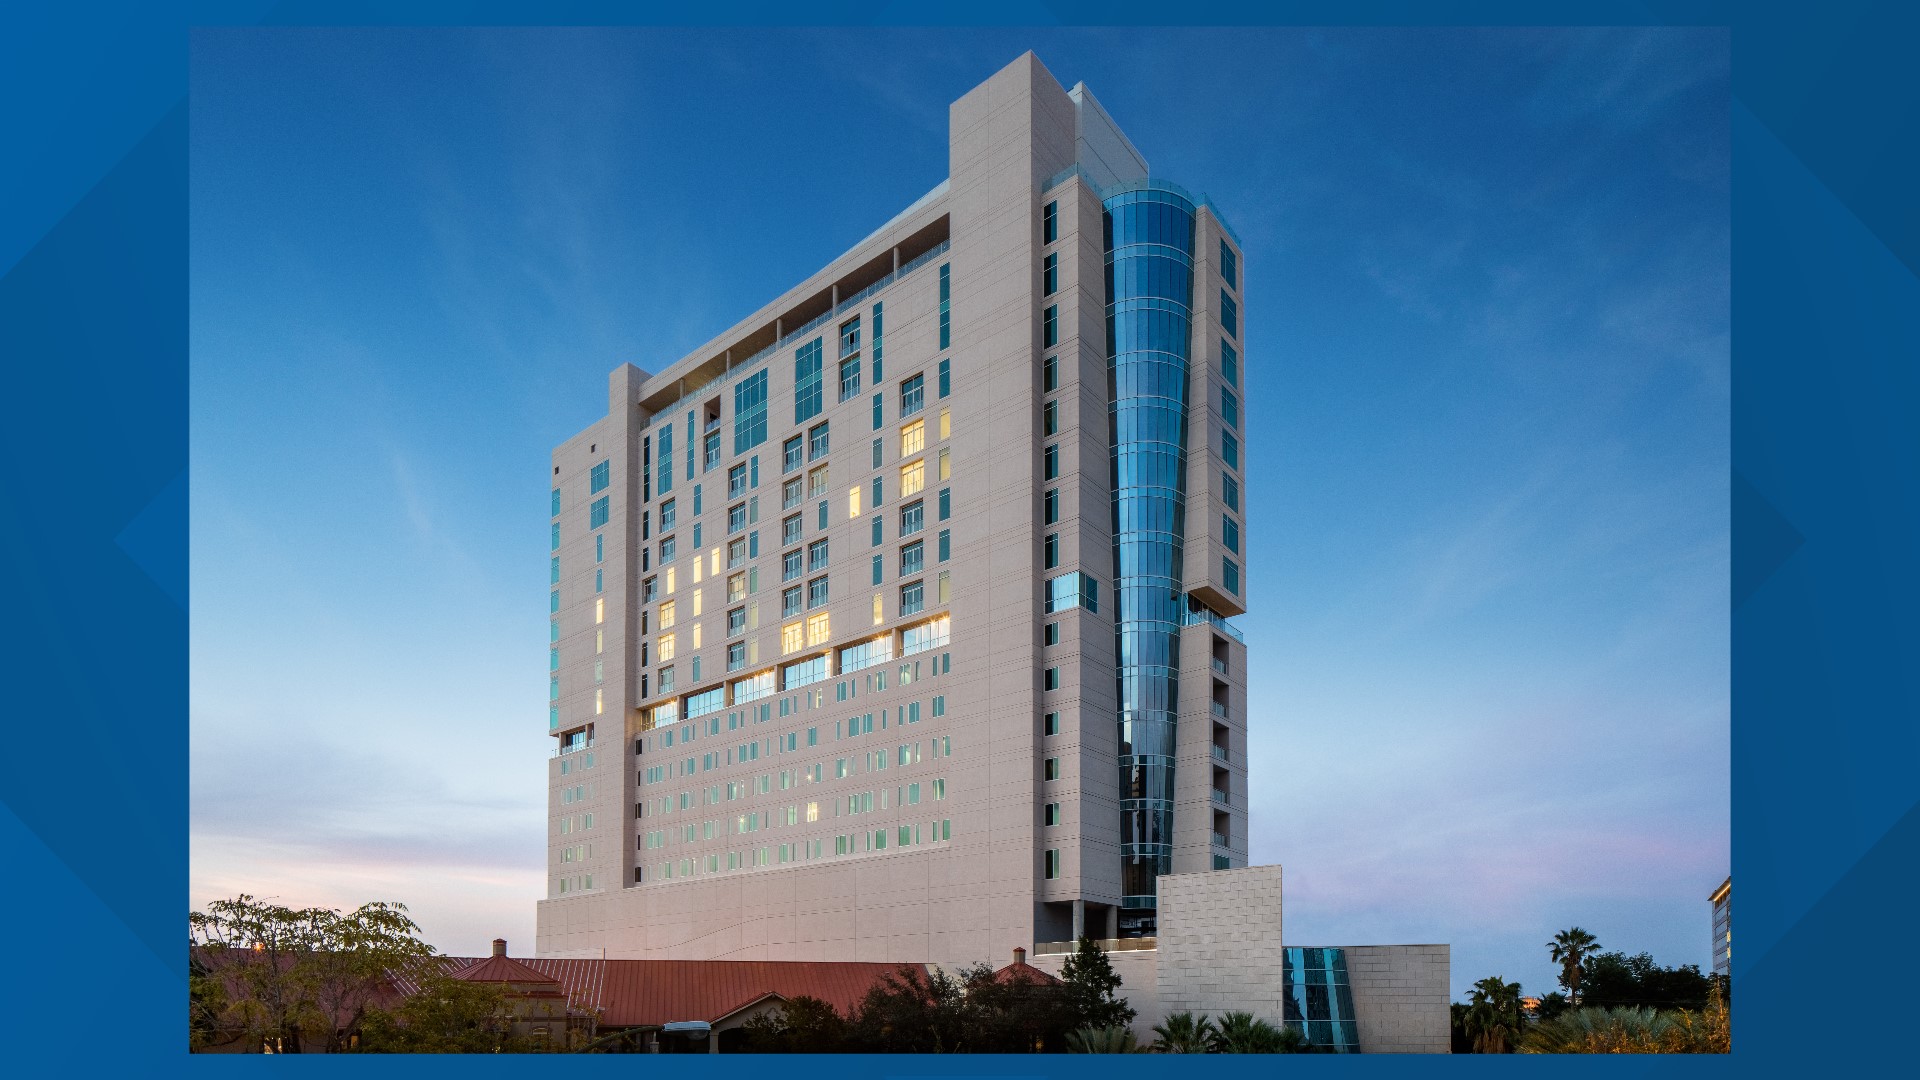 Hotels near San Antonio River Walk